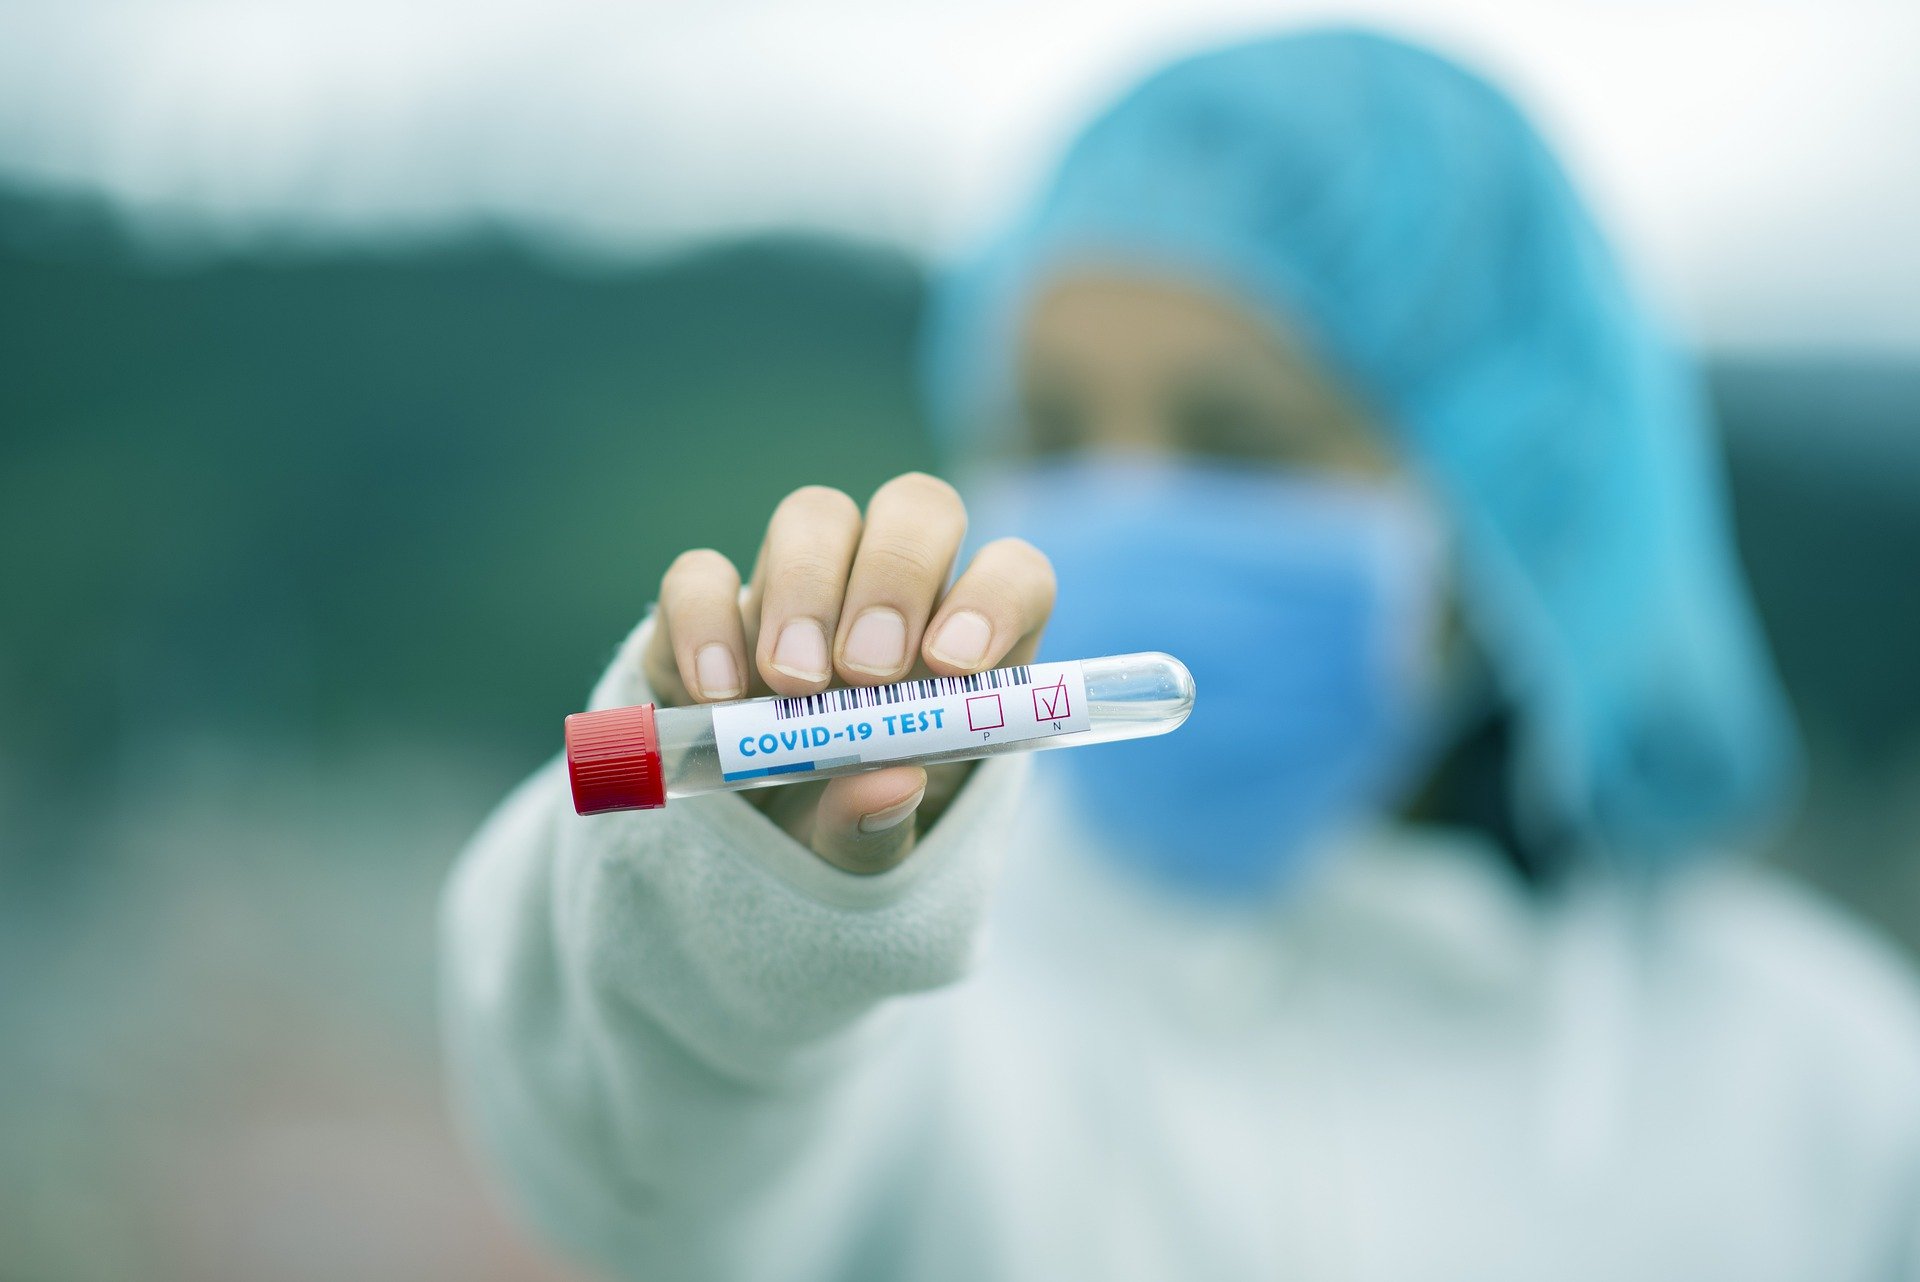 Coronavirus, in Toscana 27 i nuovi casi (5 emersi dai test sierologici). 5 i decessi, 300 le guarigioni, di cui 229 virali